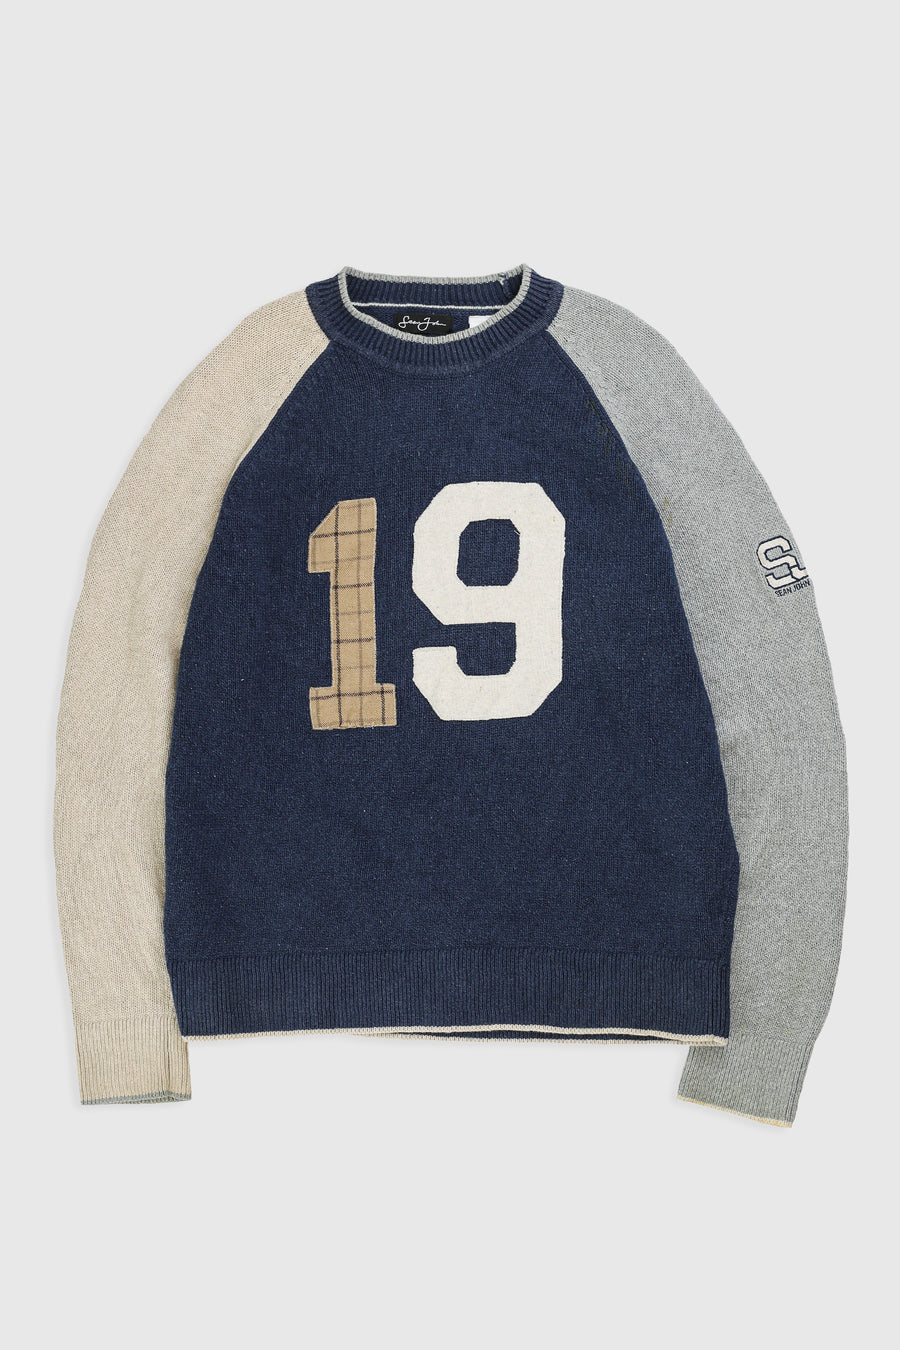 Vintage Sean John Knit Sweater